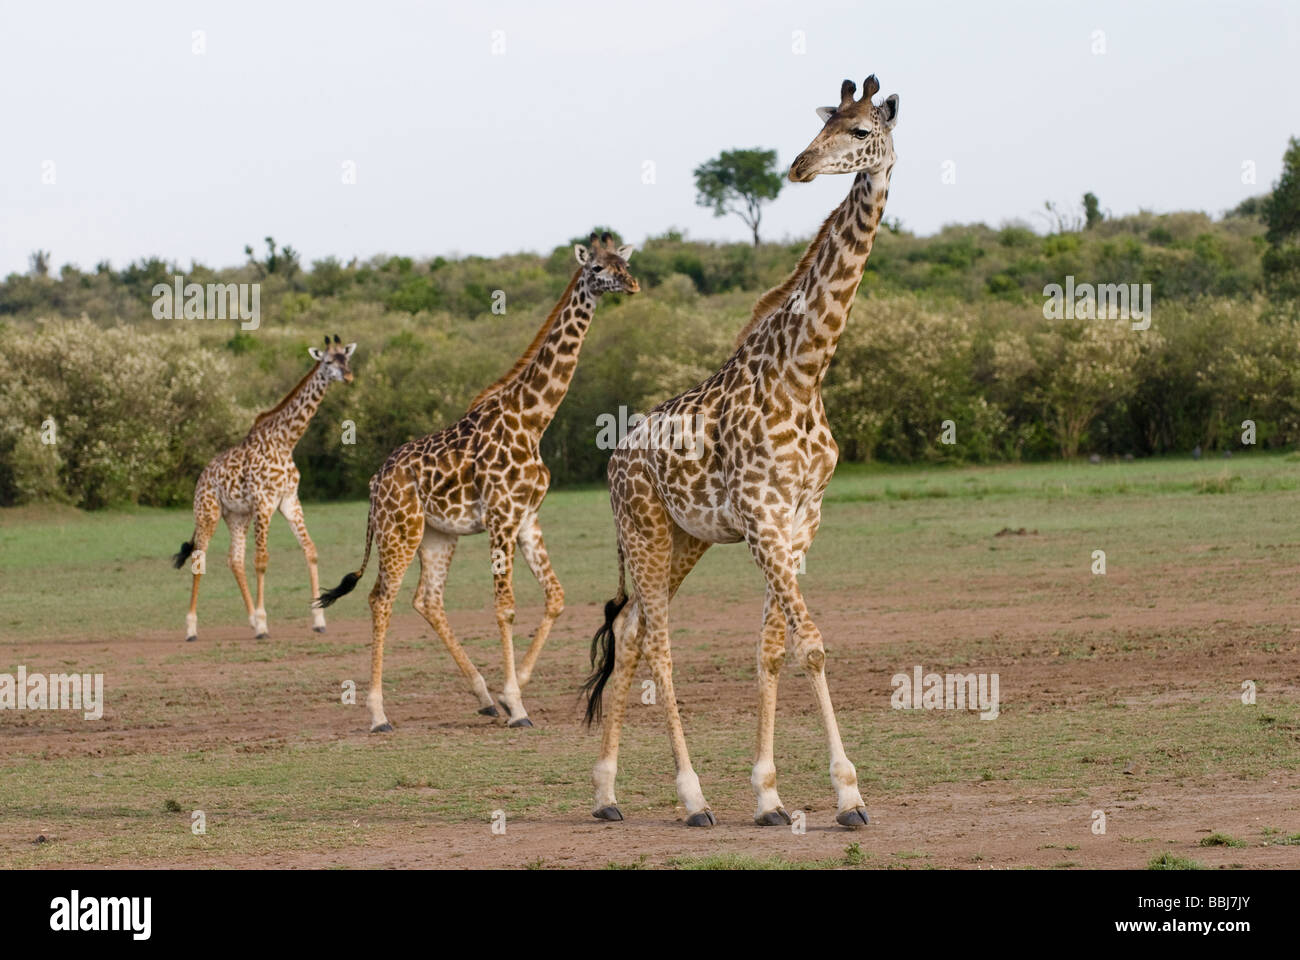 Masai giraffes Giraffa camelopardalis tippelskirchi Masai Mara KENYA East Africa Stock Photo